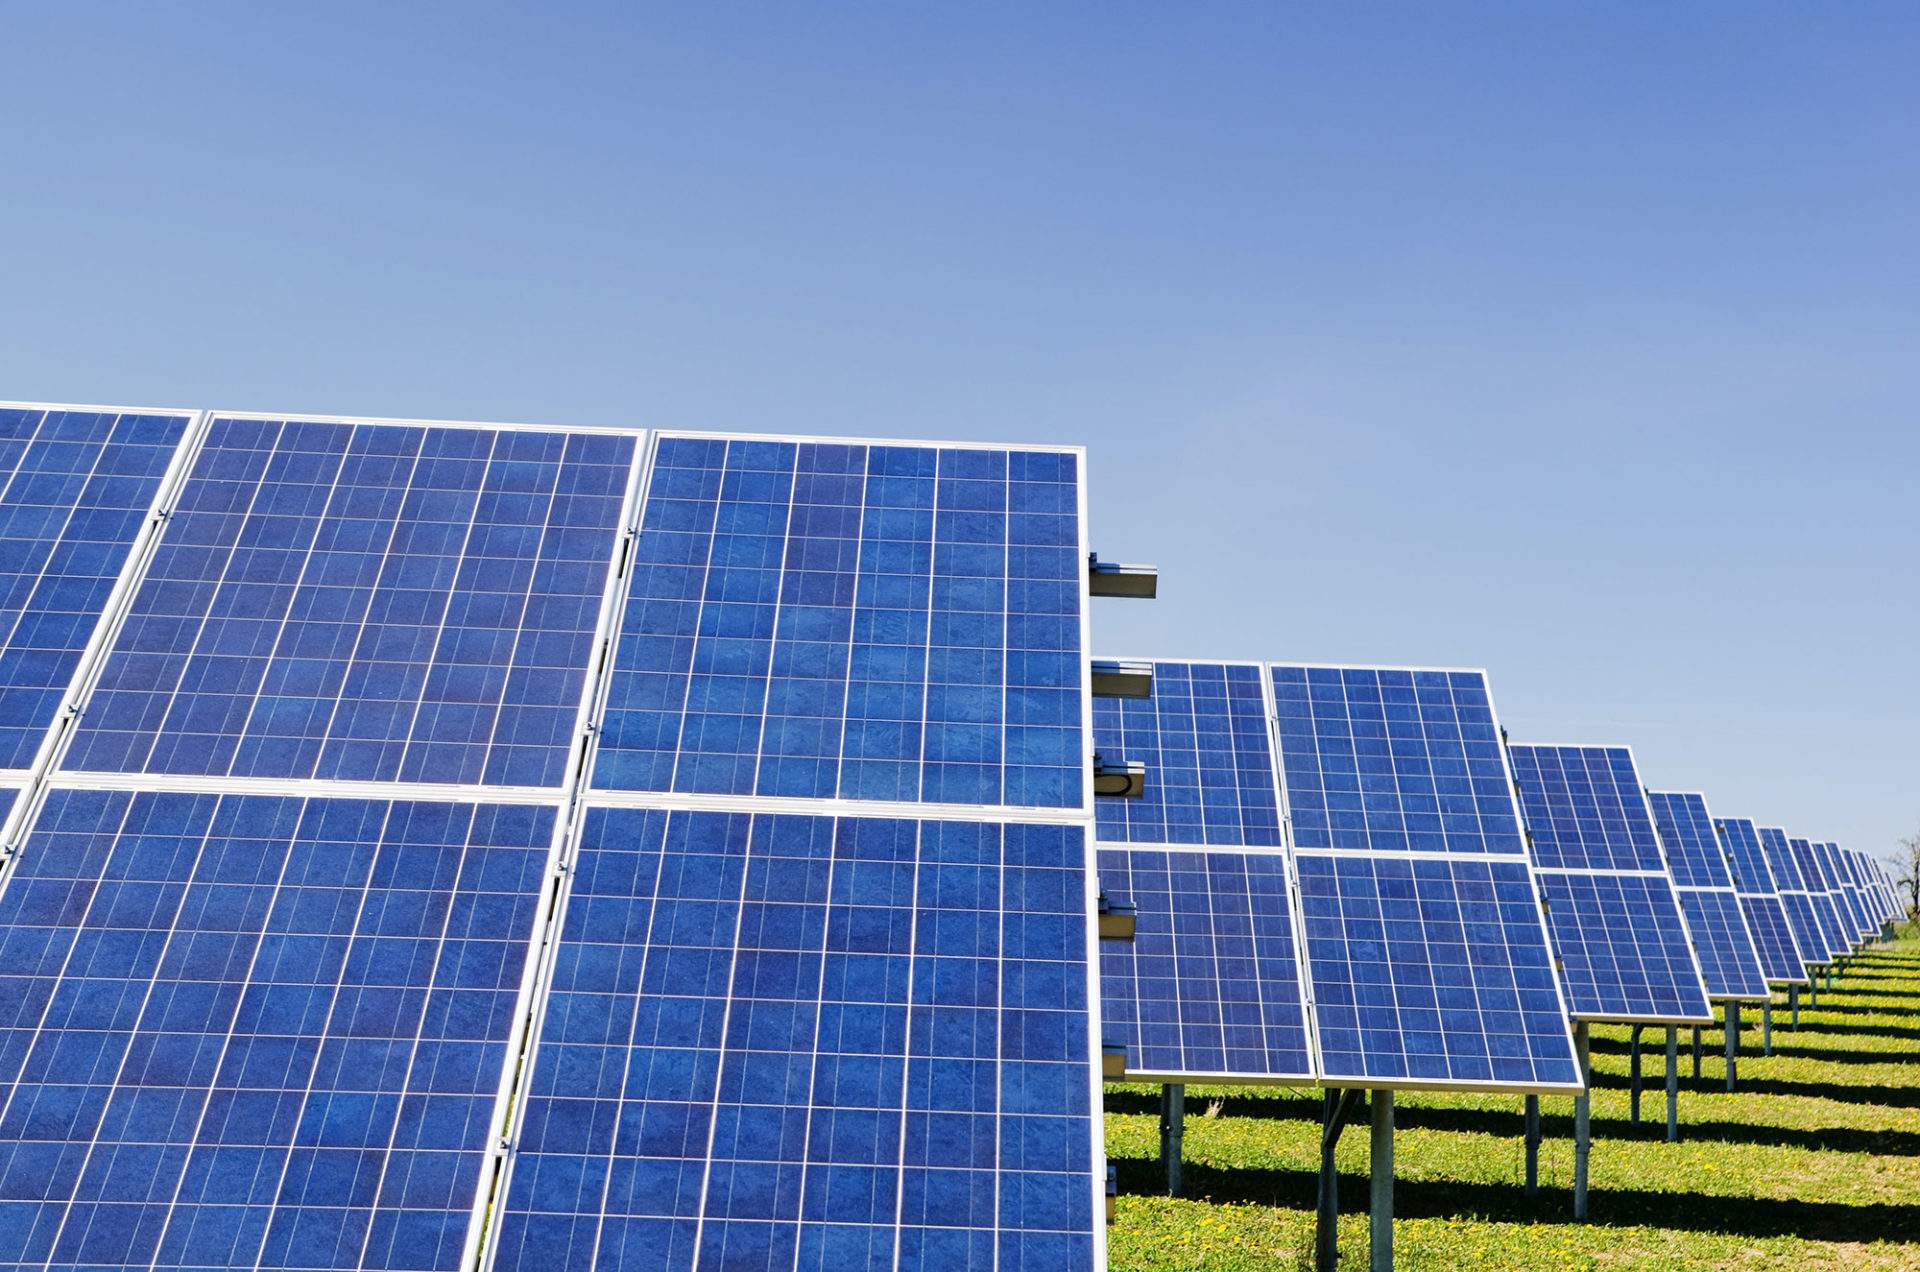 Diatreme Resources: High Grade Silica to Fuel Future Solar Growth